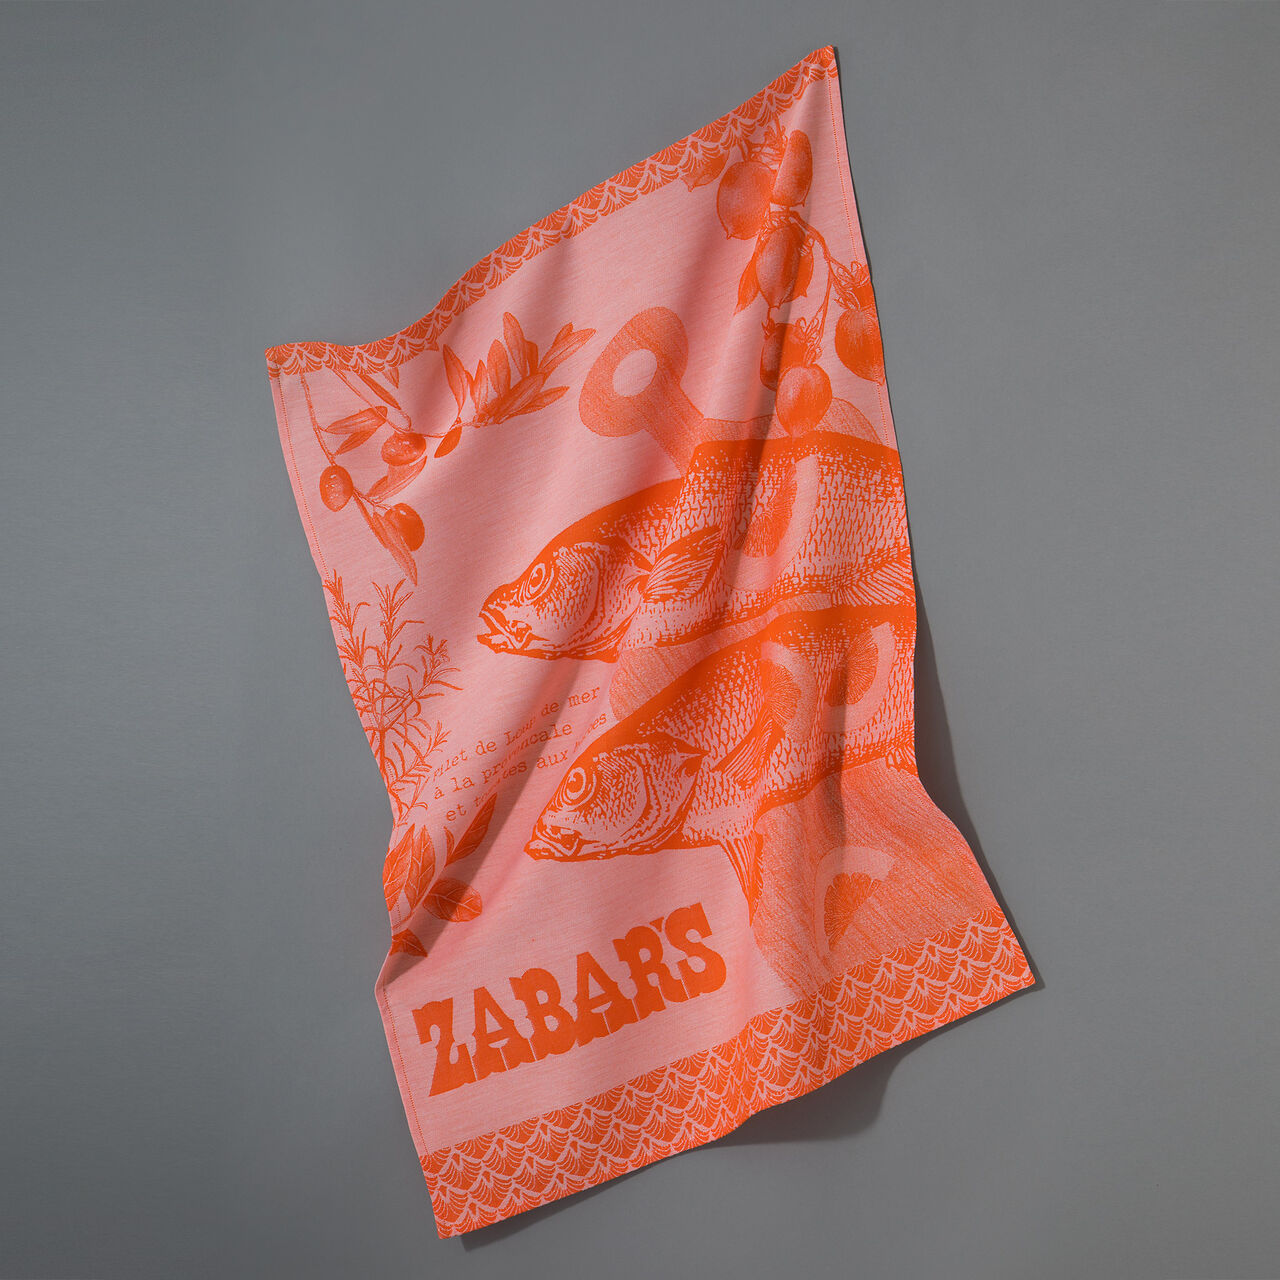 Le Jacquard Francais Zabar's Tea Towel 31"x24" - 26U49, , large image number 0